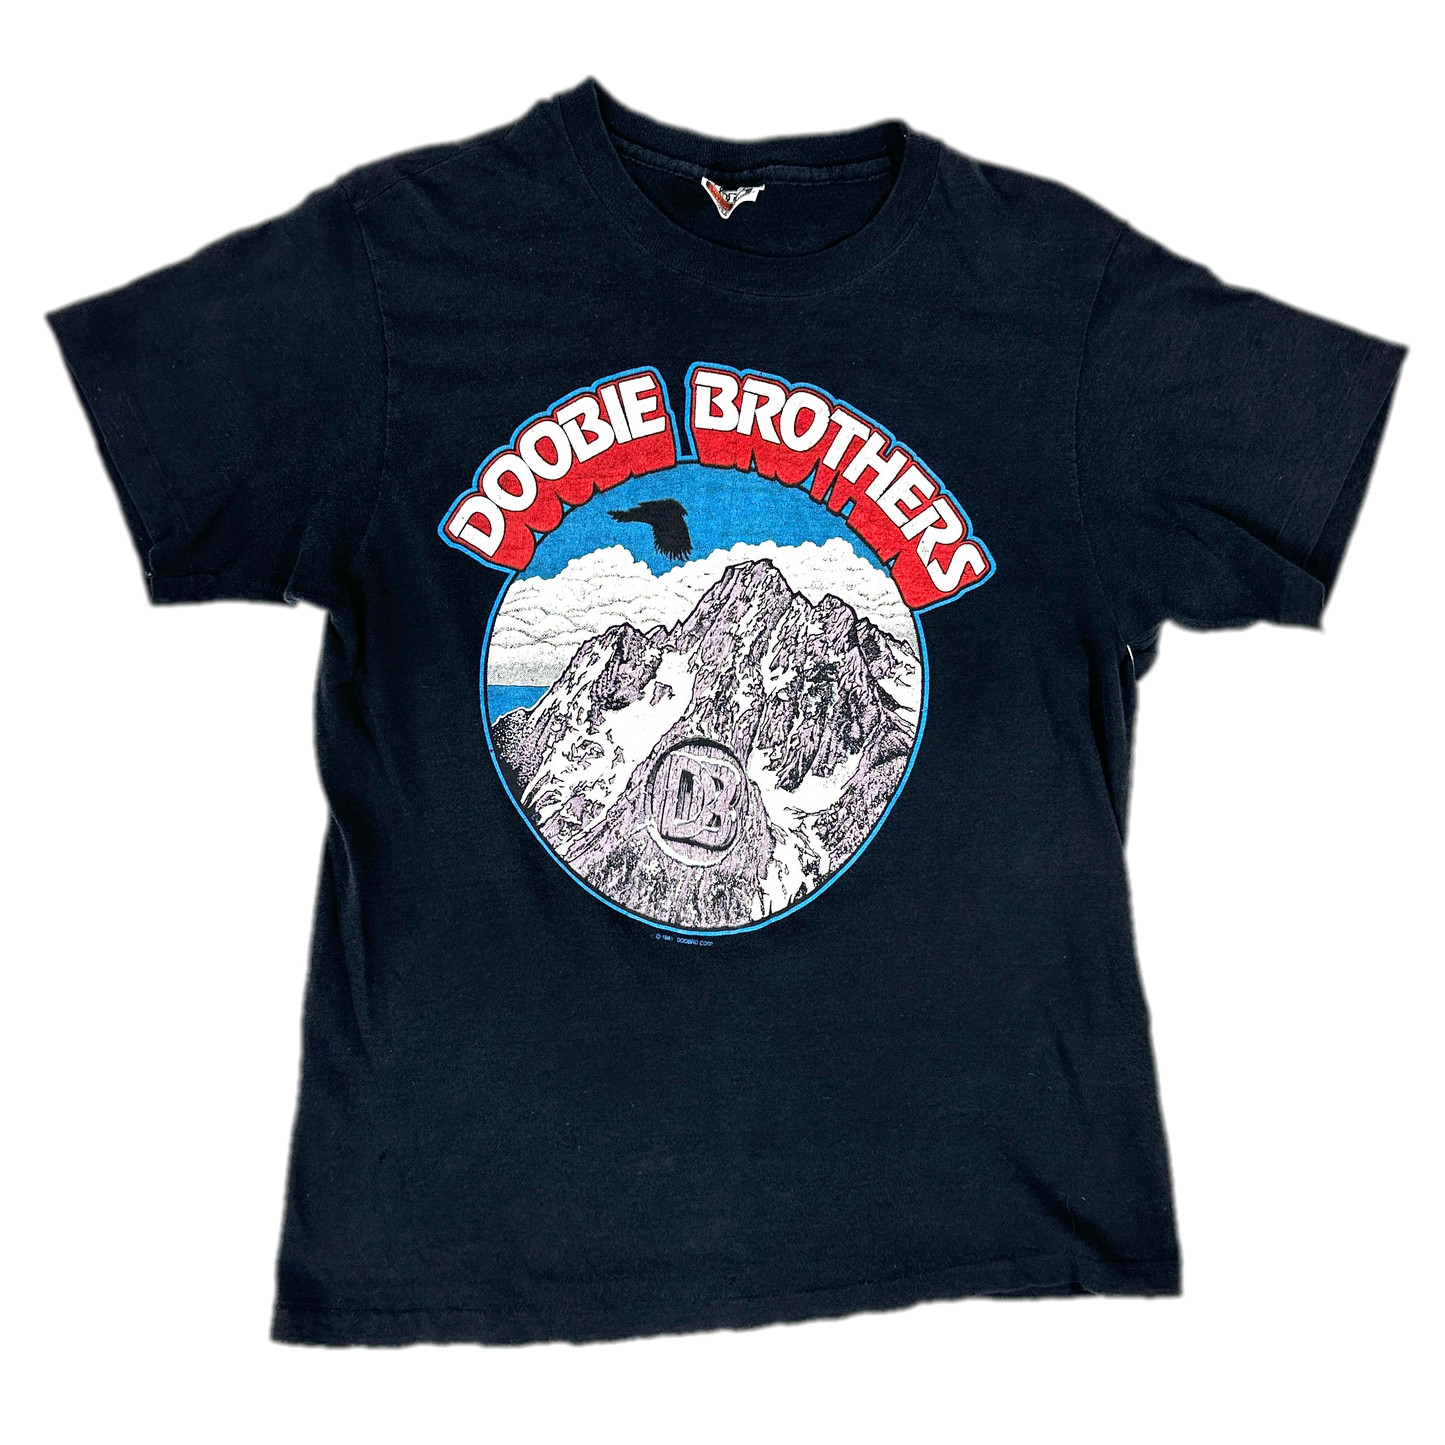 70's Doobie Brothers Black Music T-shirt sz M